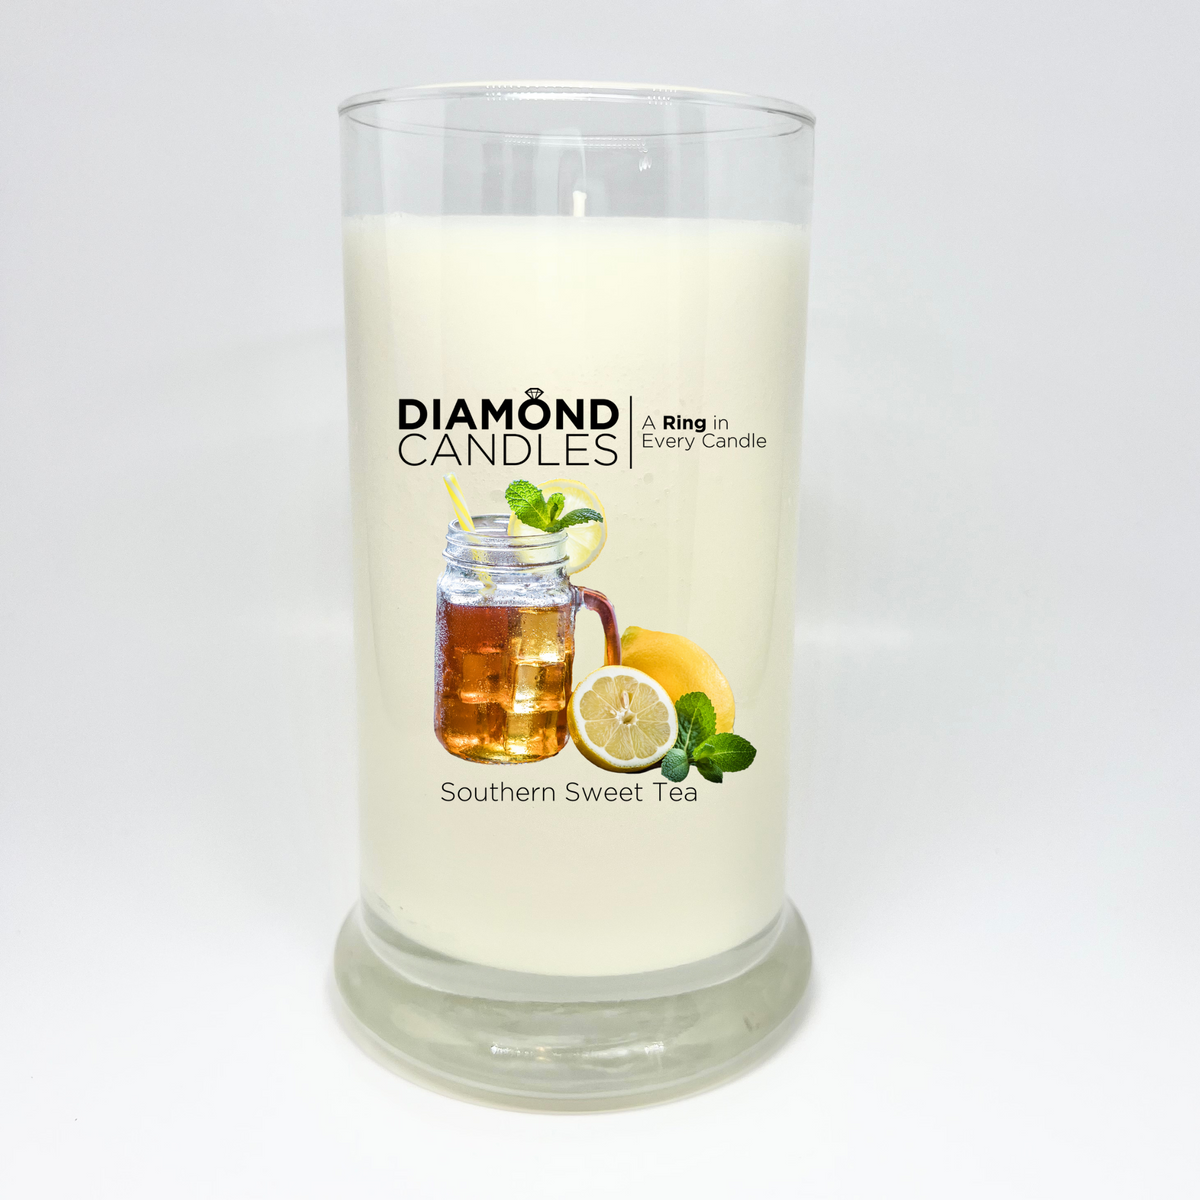 Southern Sweet Tea Candle 21 oz. – Diamond Candles